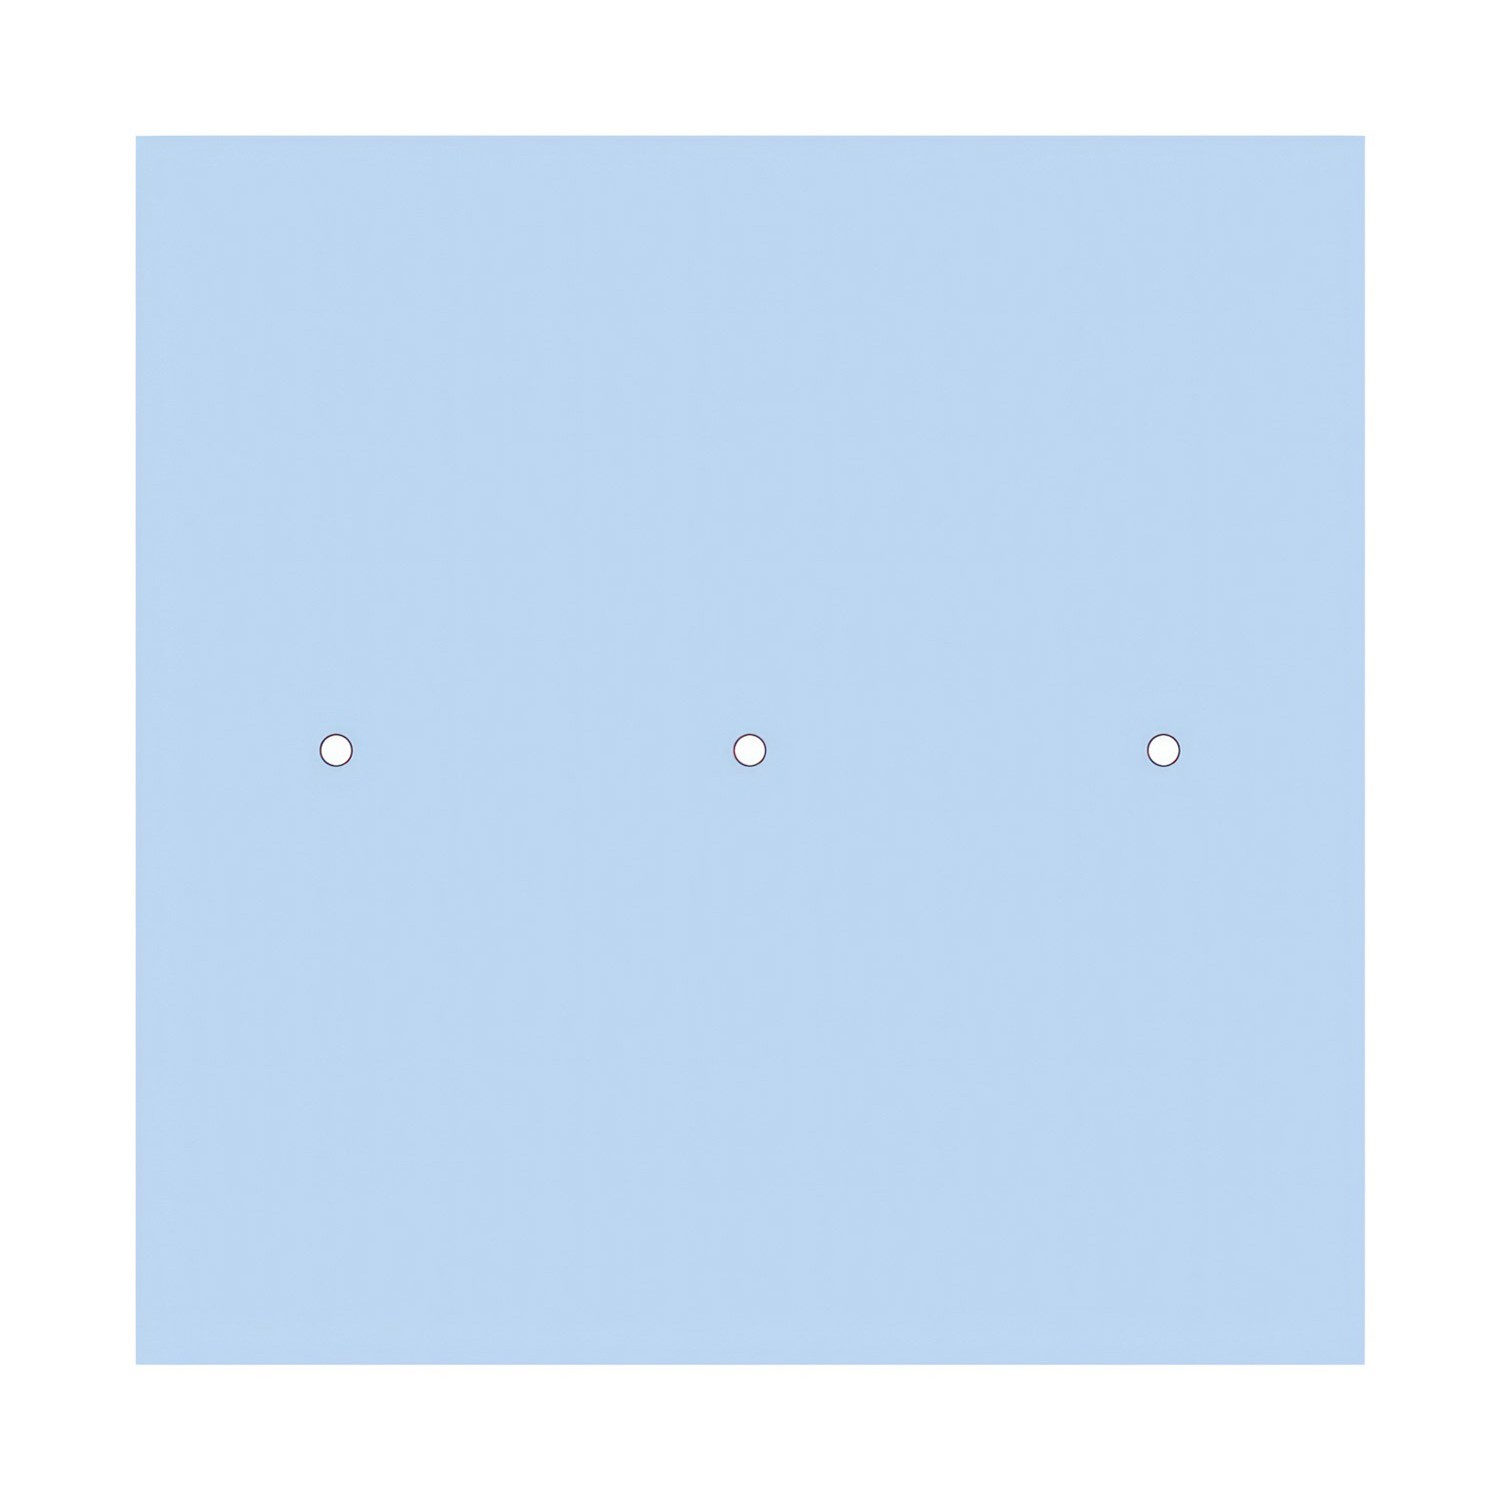 Komplett 400mm takkopp Rose-One System kvadrat - 3 hål (i triangelform) og 4 sidehål